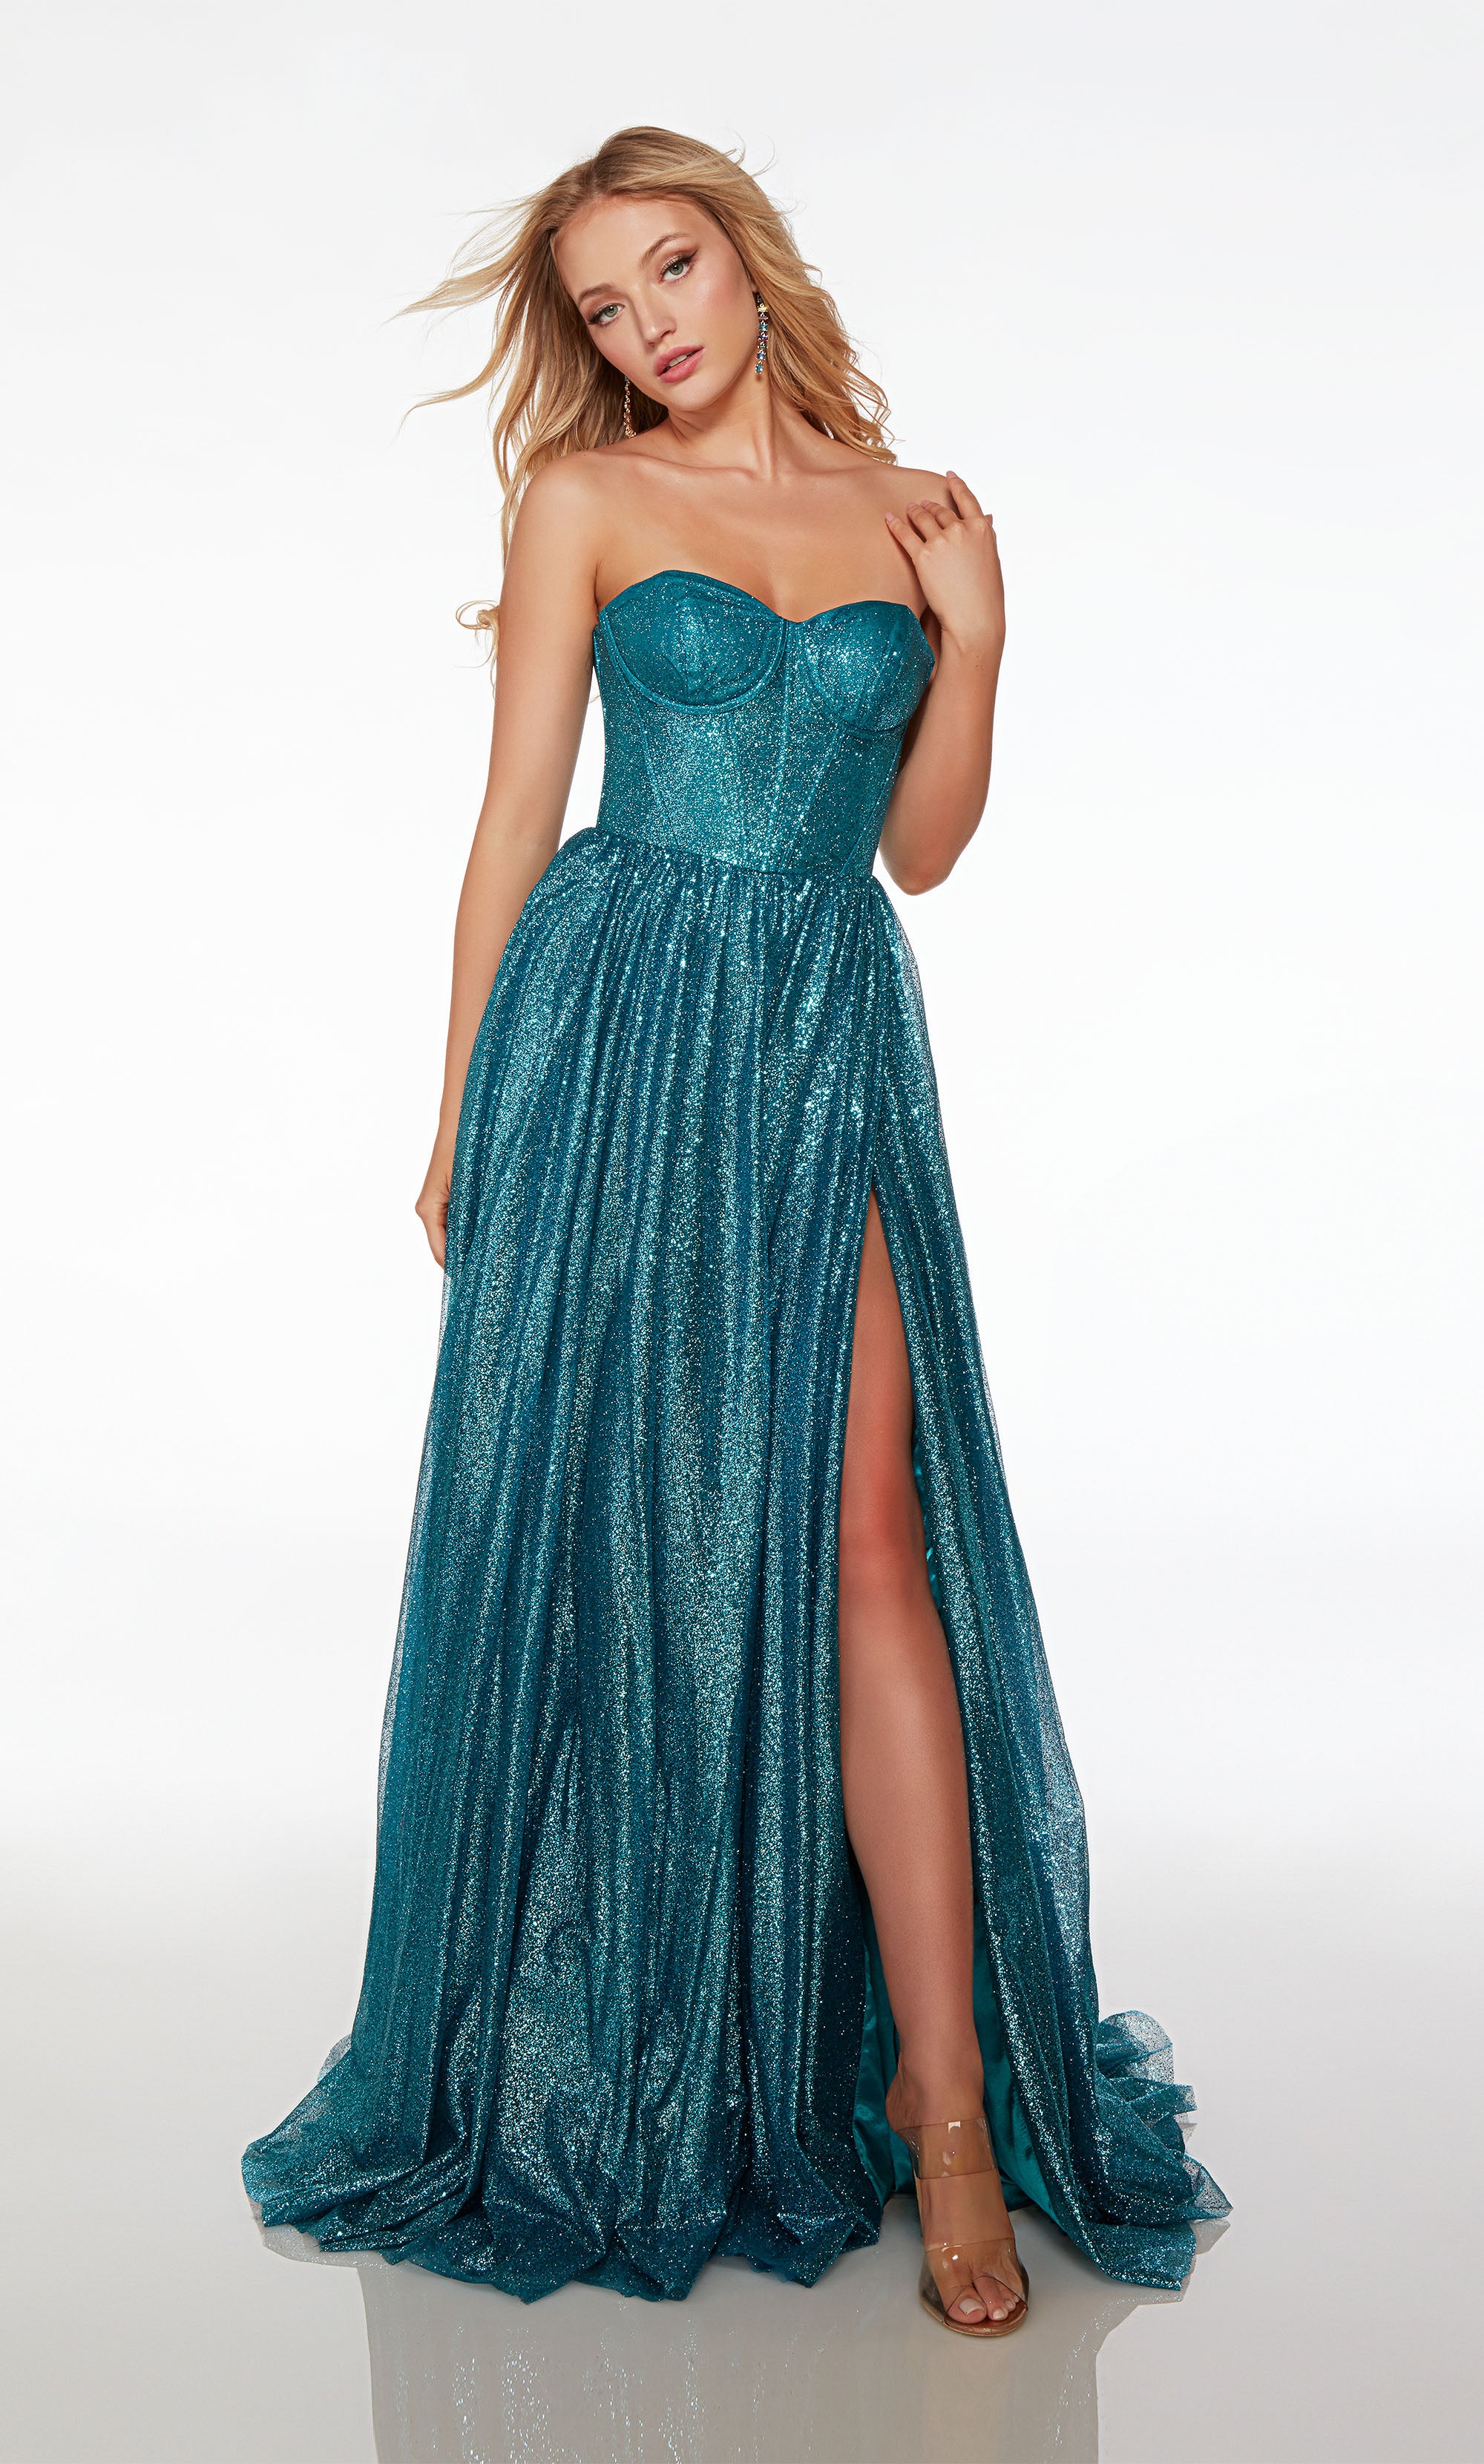 Dress: Lace-up Long, Back 61601. | Strapless, A-line, Formal Alyce Paris